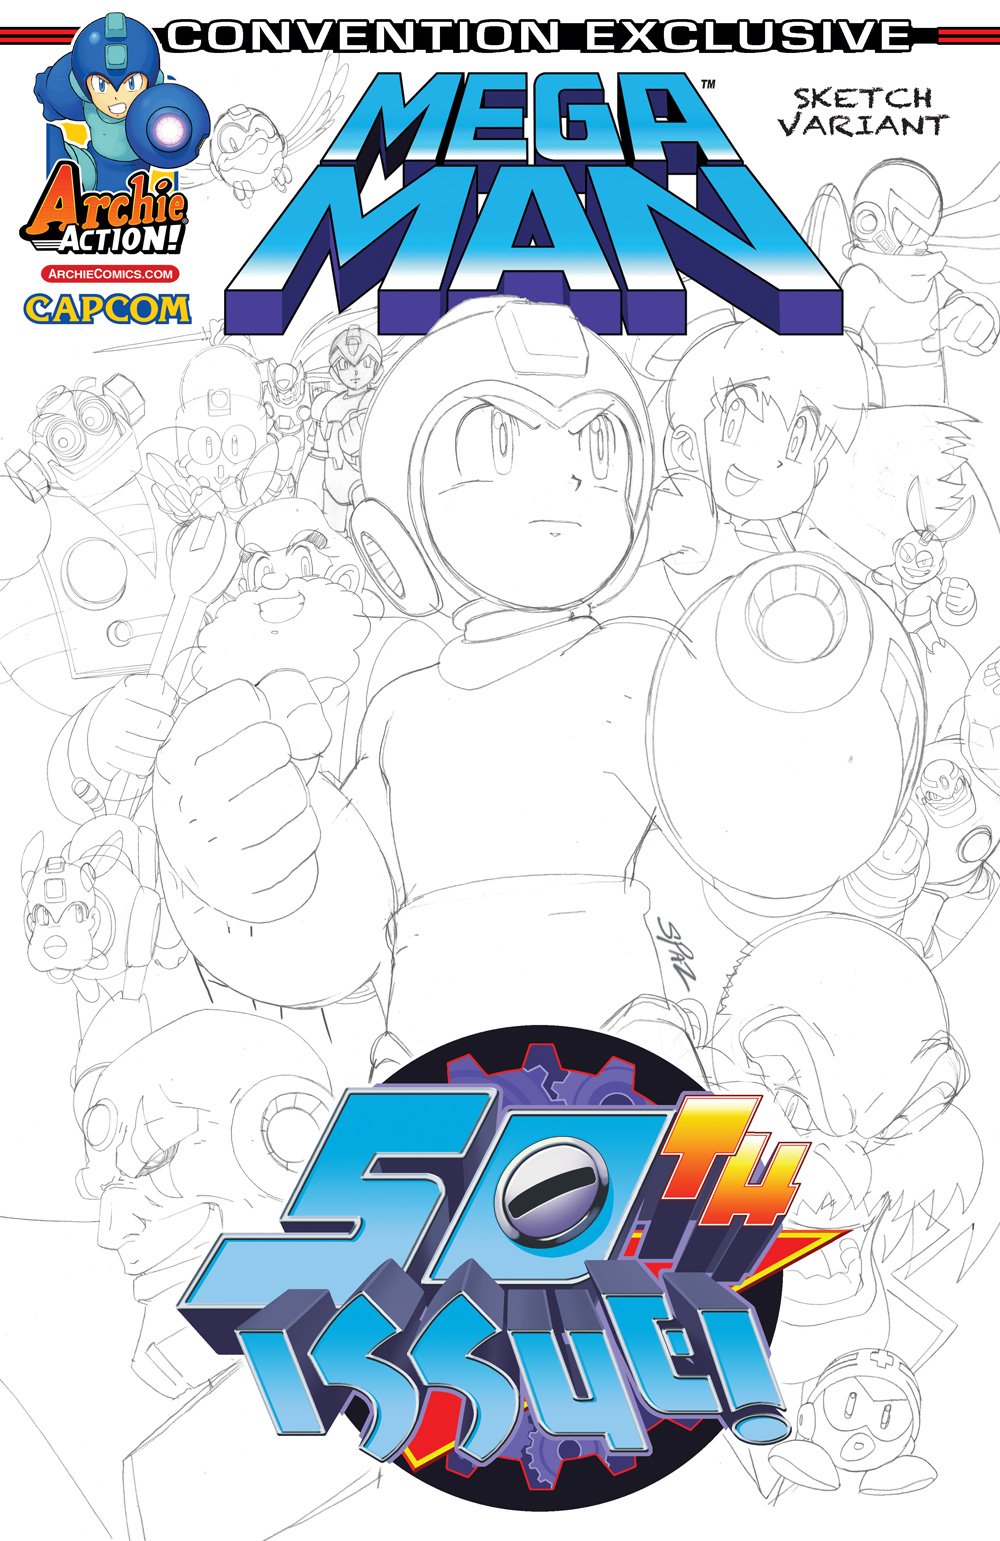 Mega Man 050 (August 2015) (convention exclusive)